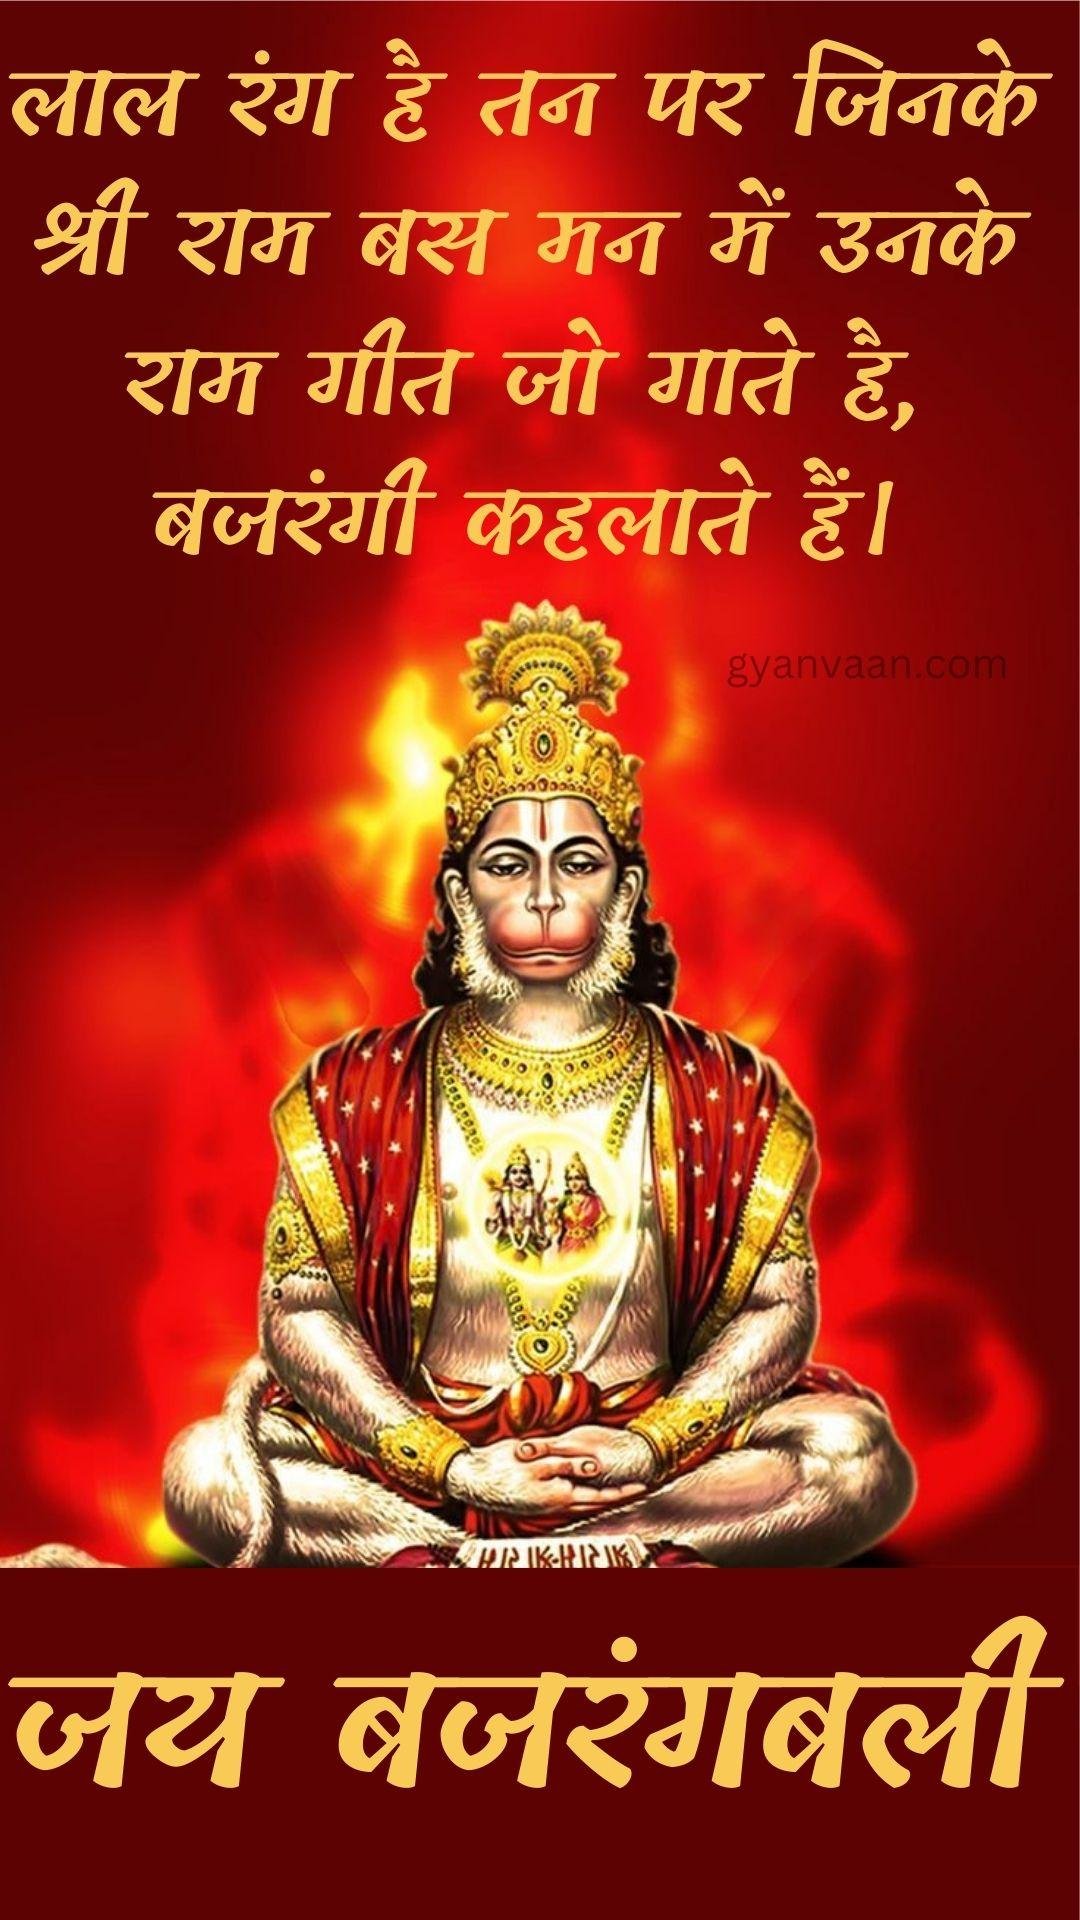 Hanuman Quotes Shayari And Whatsapp Status For Mobile With Hanuman Images And Photos 37 - Hanuman Images